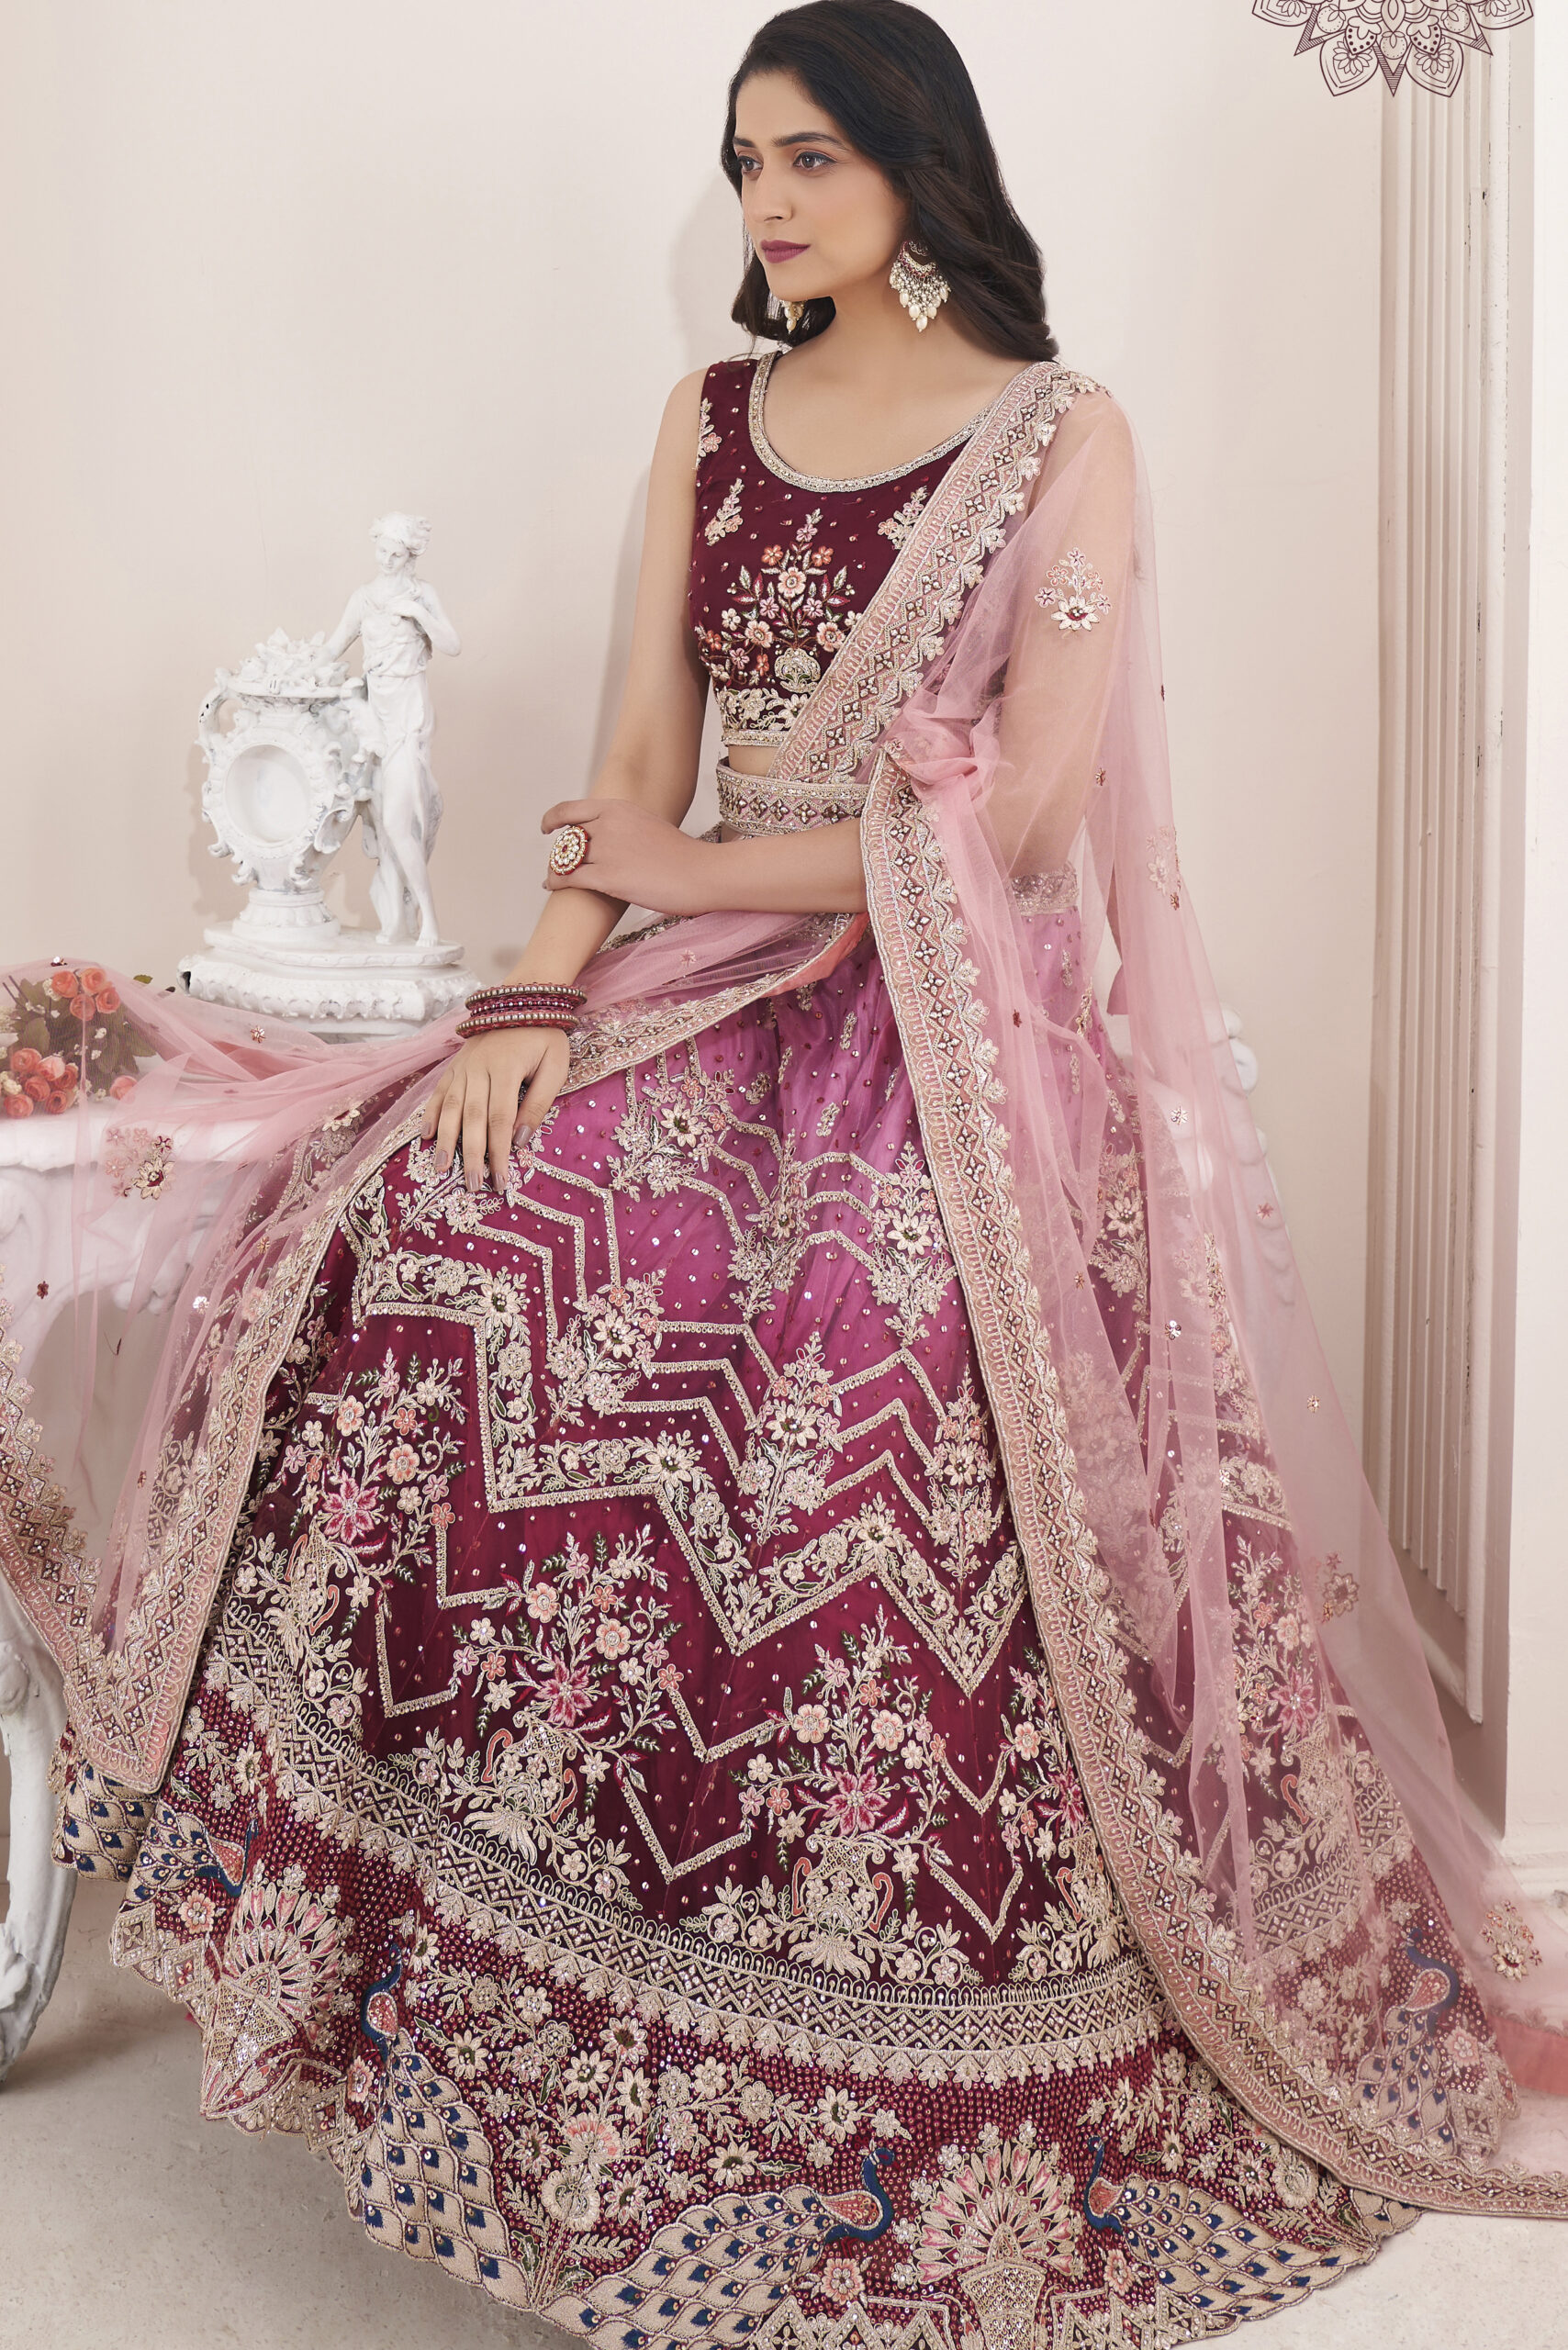 New and Unique Multi Wedding Lehenga Choli with Intricate Embellishments.